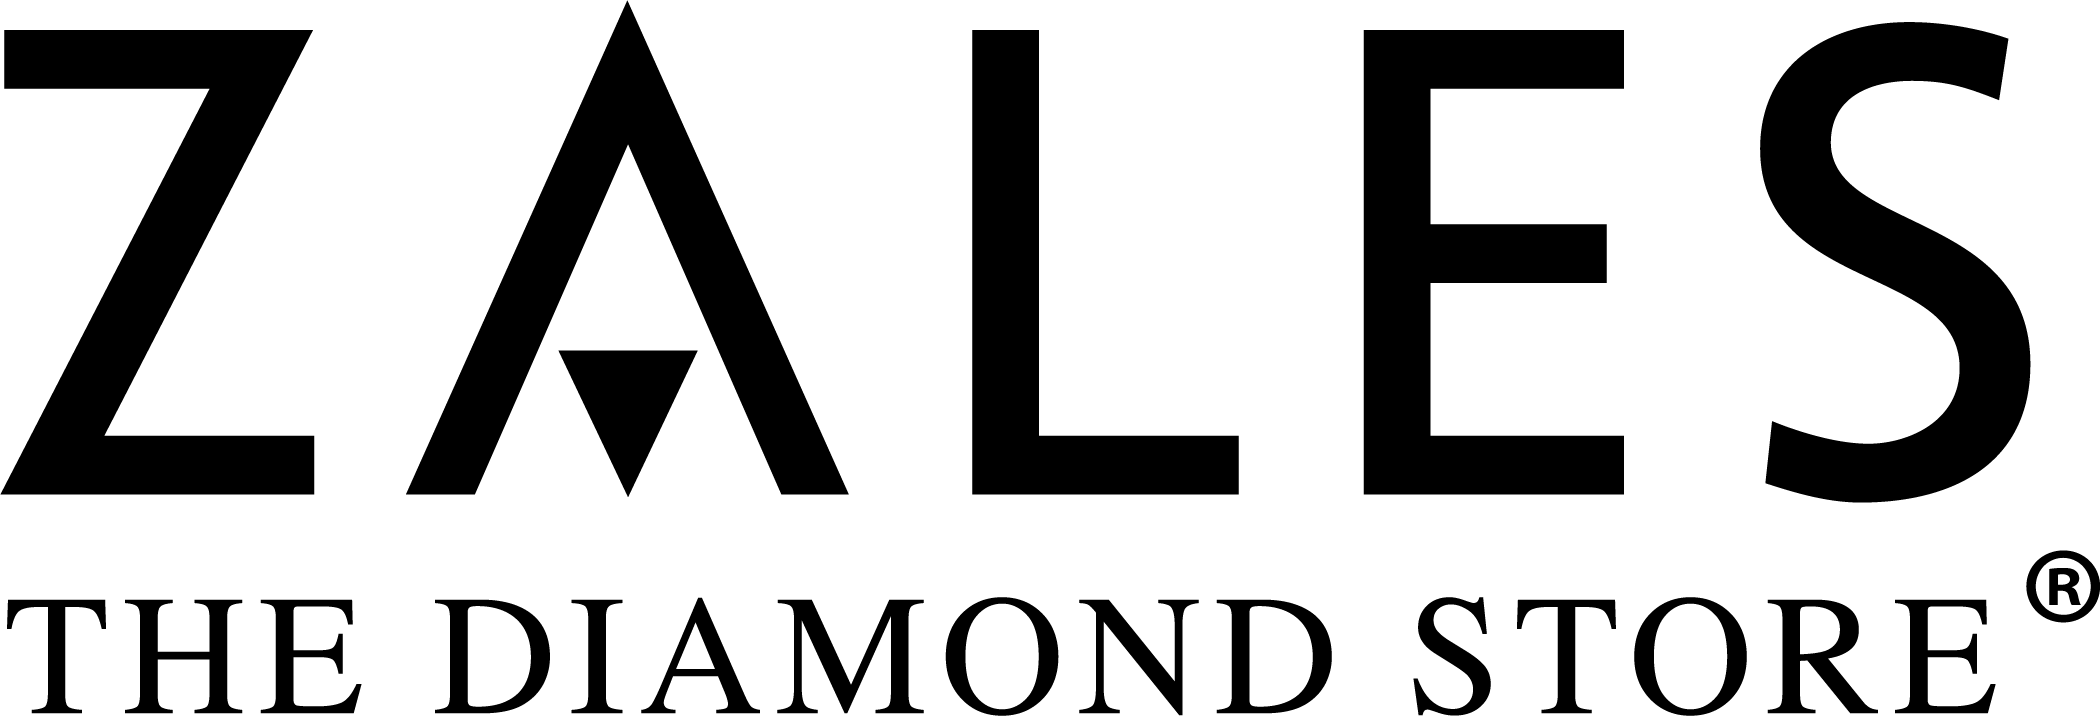 Zales The Diamond Store Logo